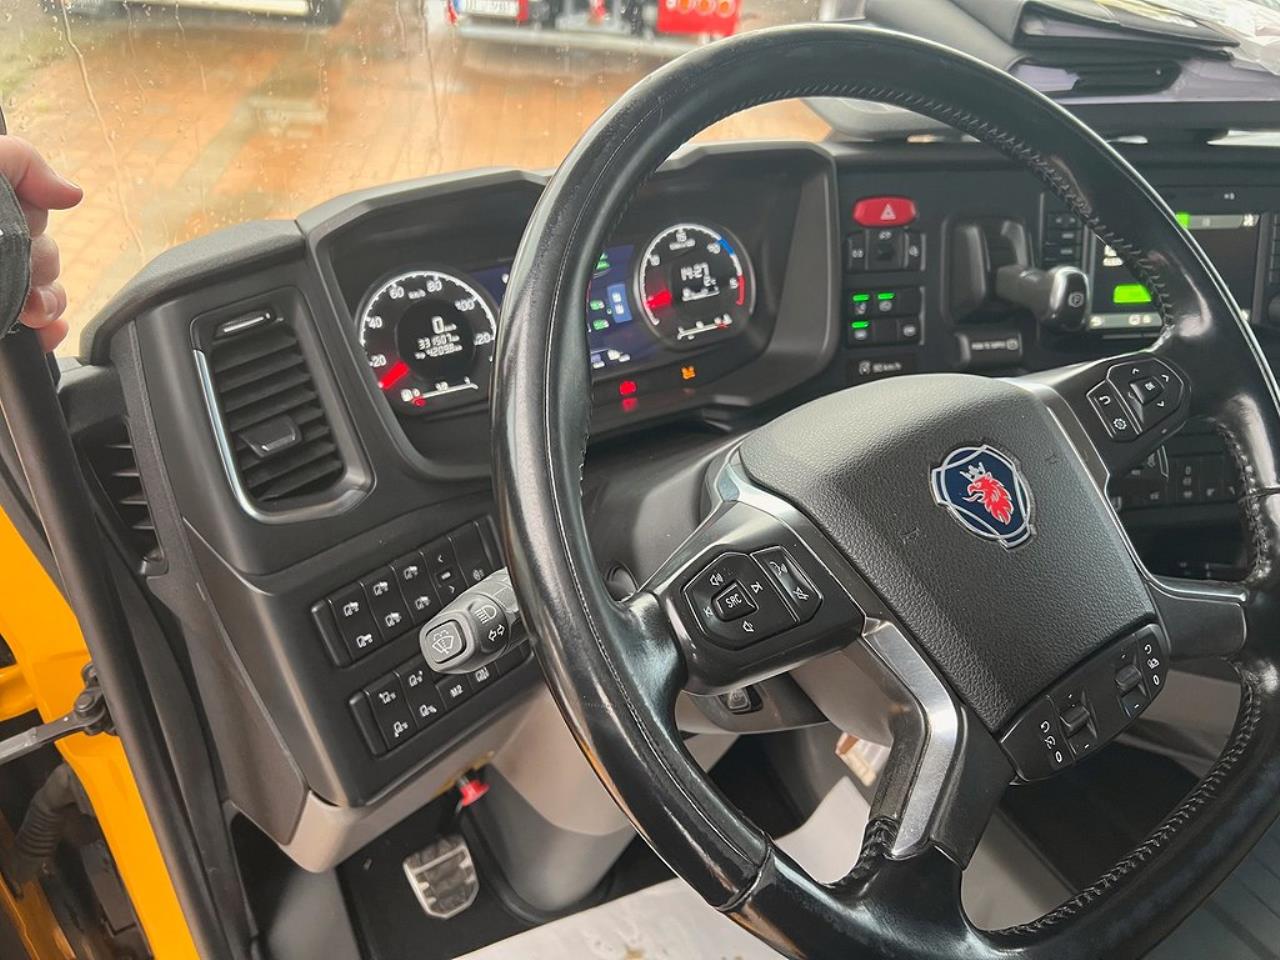 Scania R650 V8 6x4 Tippbil, Sidotipp,  2018 - Tipp